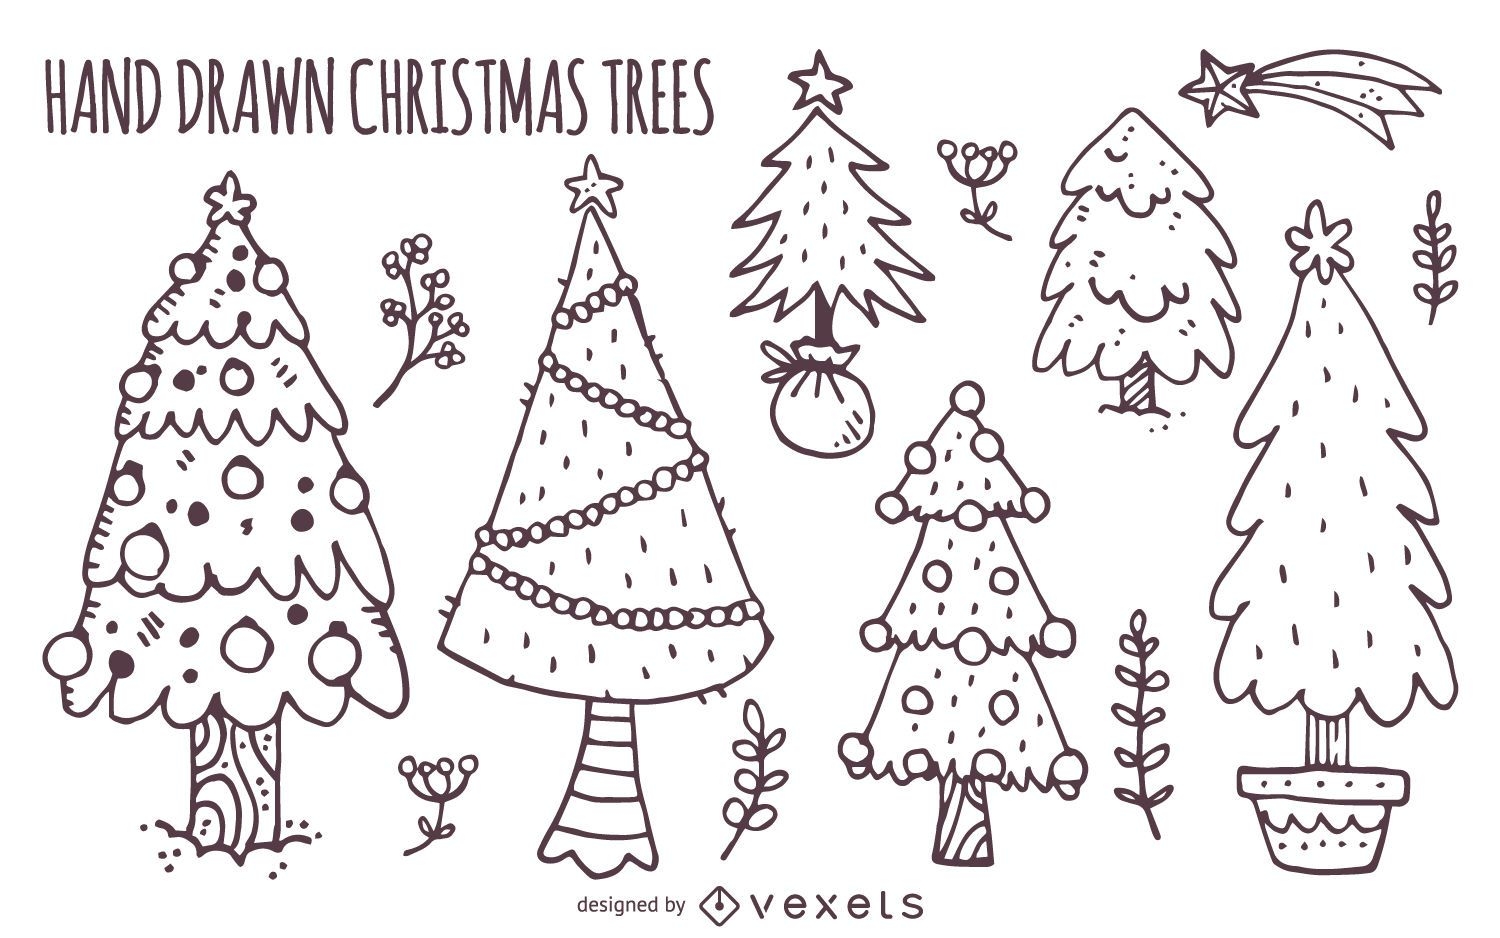 Hand drawn Christmas trees set